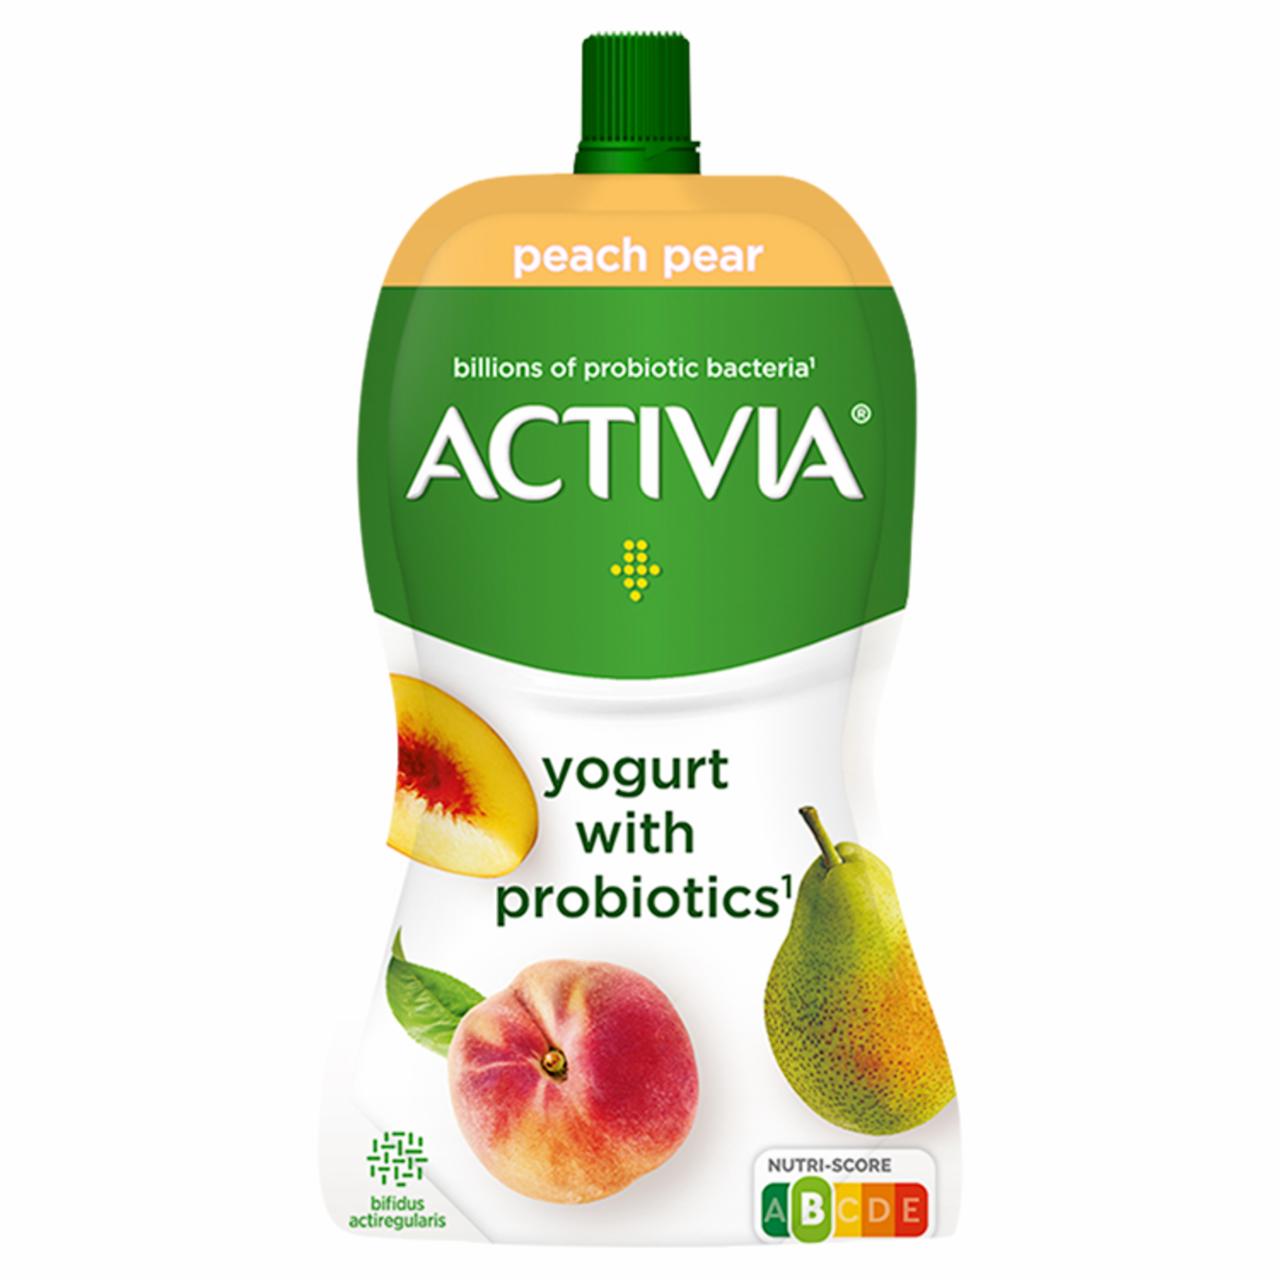 Fotografie - Activia yogurt with probiotics peach, pear